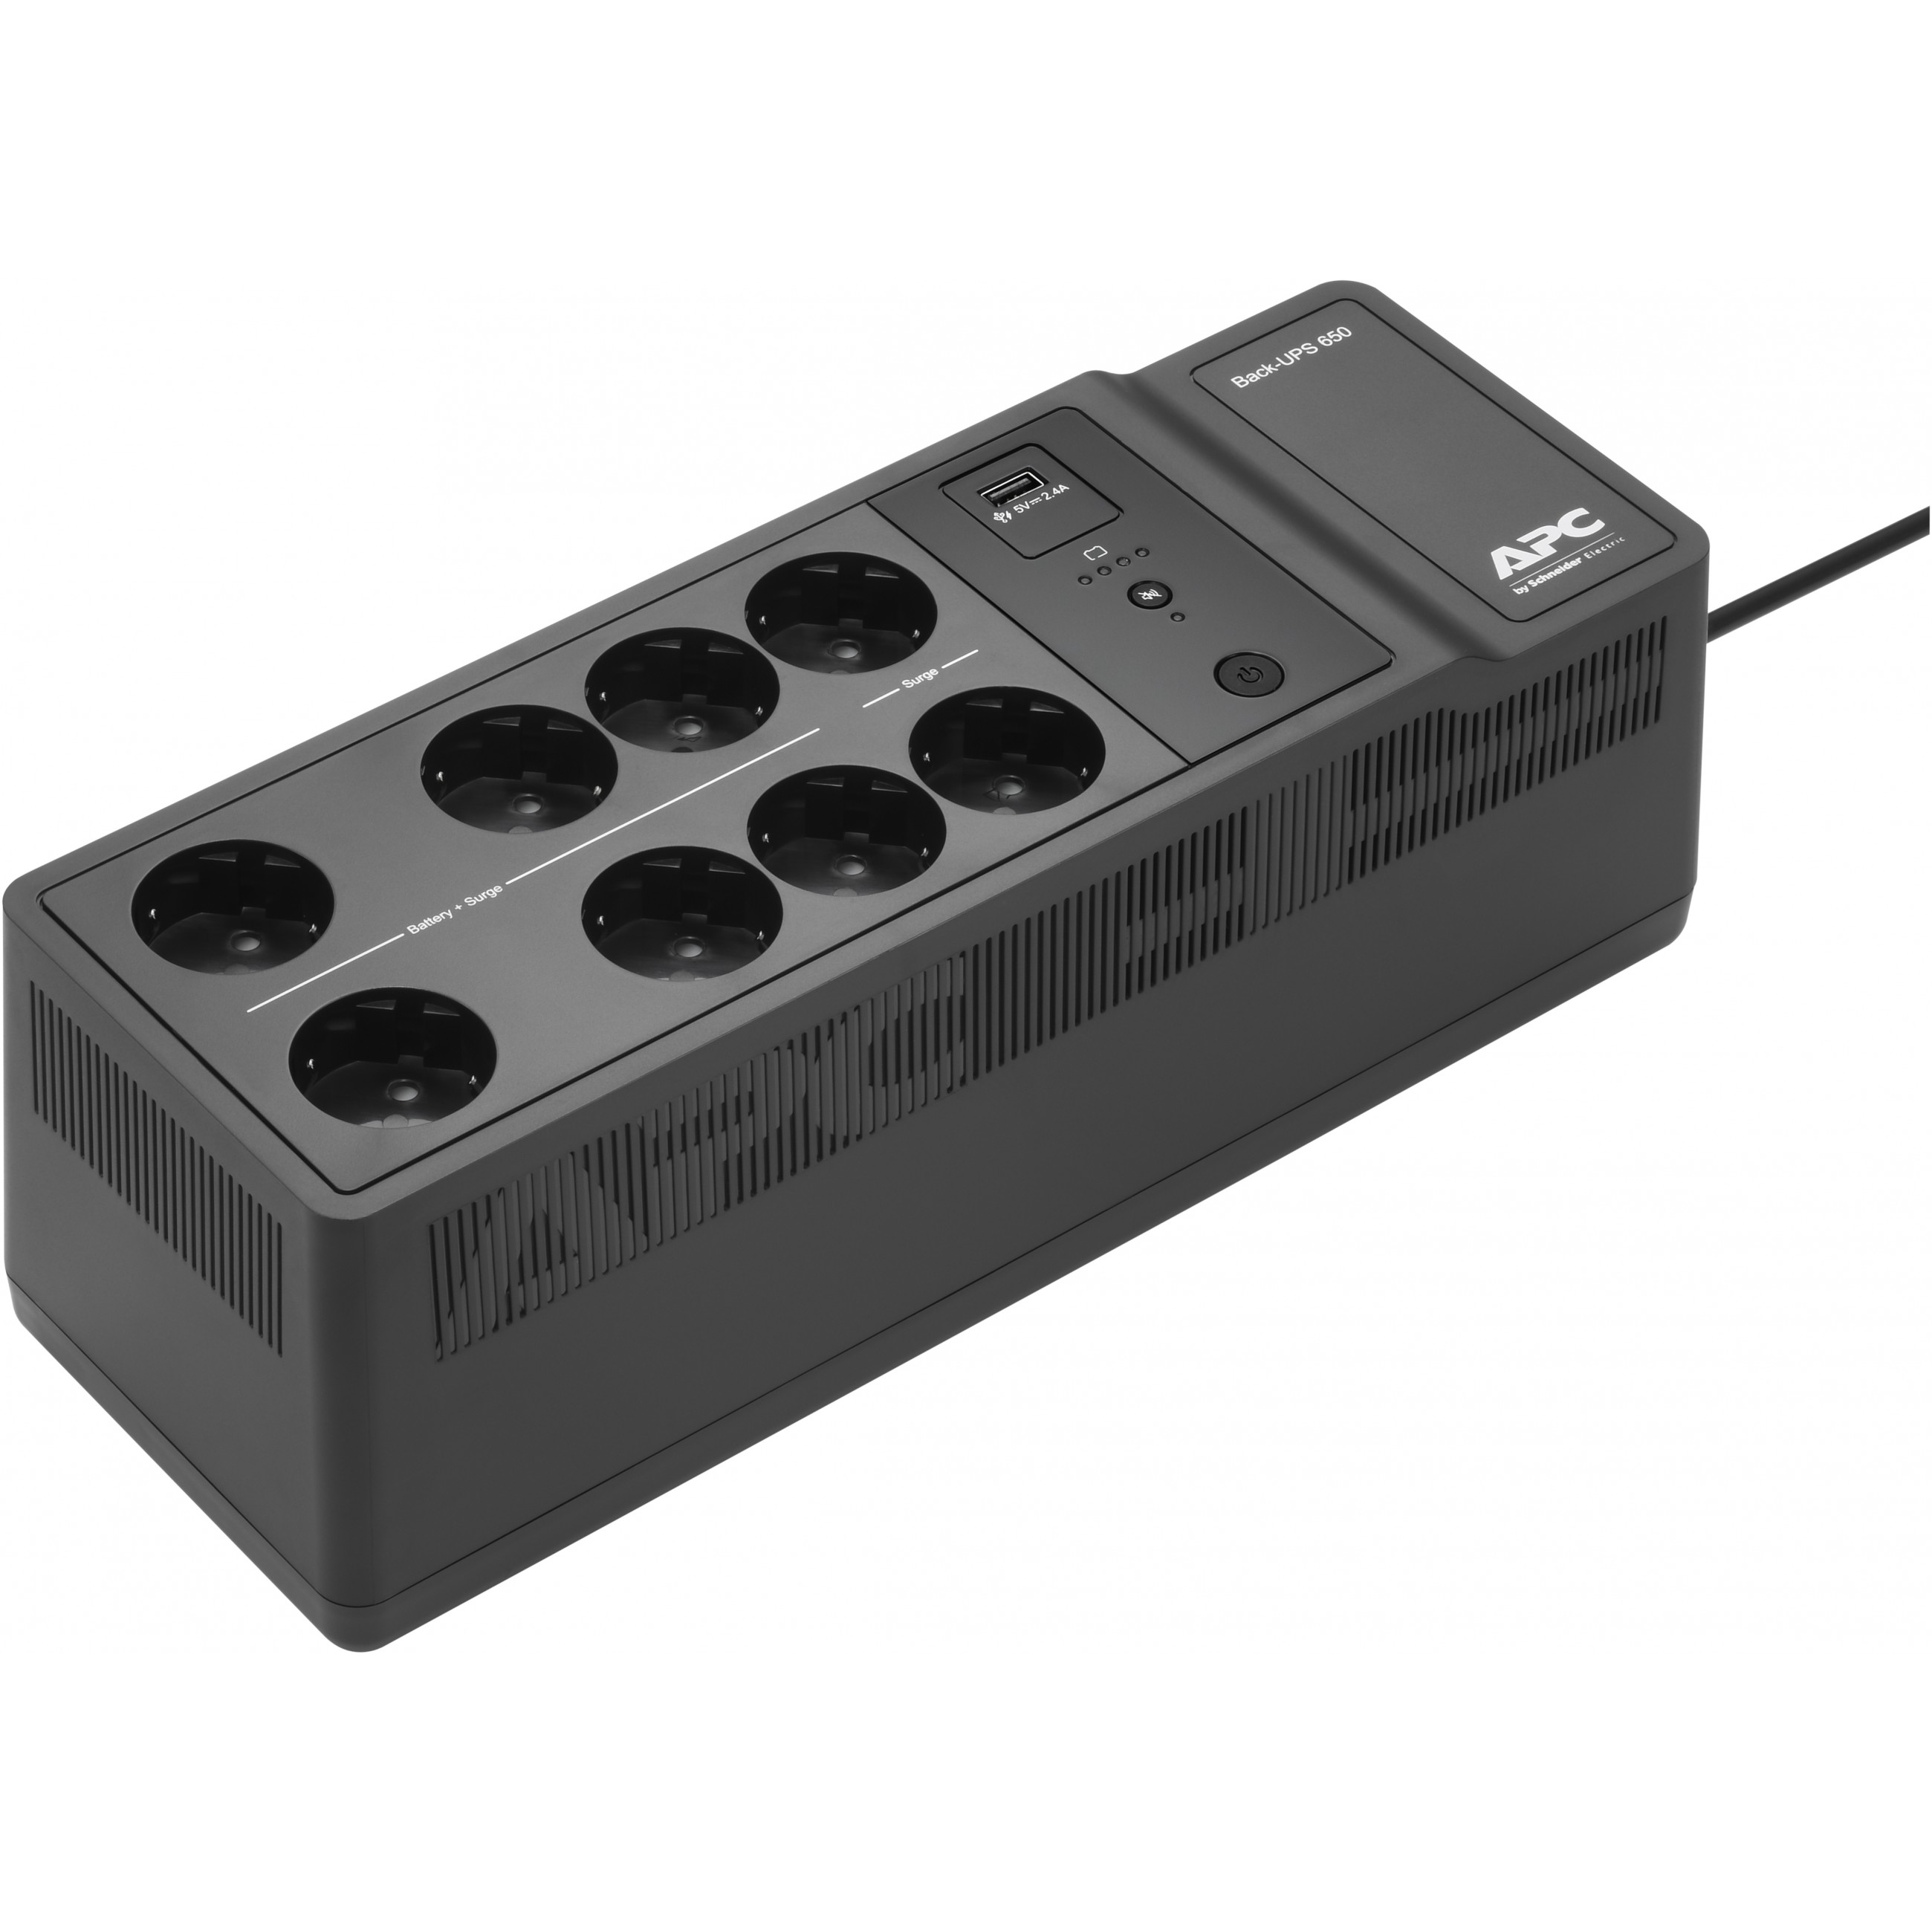 APC Back-UPS 650VA 230V 1 USB charging port - (Offline-) USV Standby (Offline) 0,65 kVA 400 W 8 AC-Ausgänge